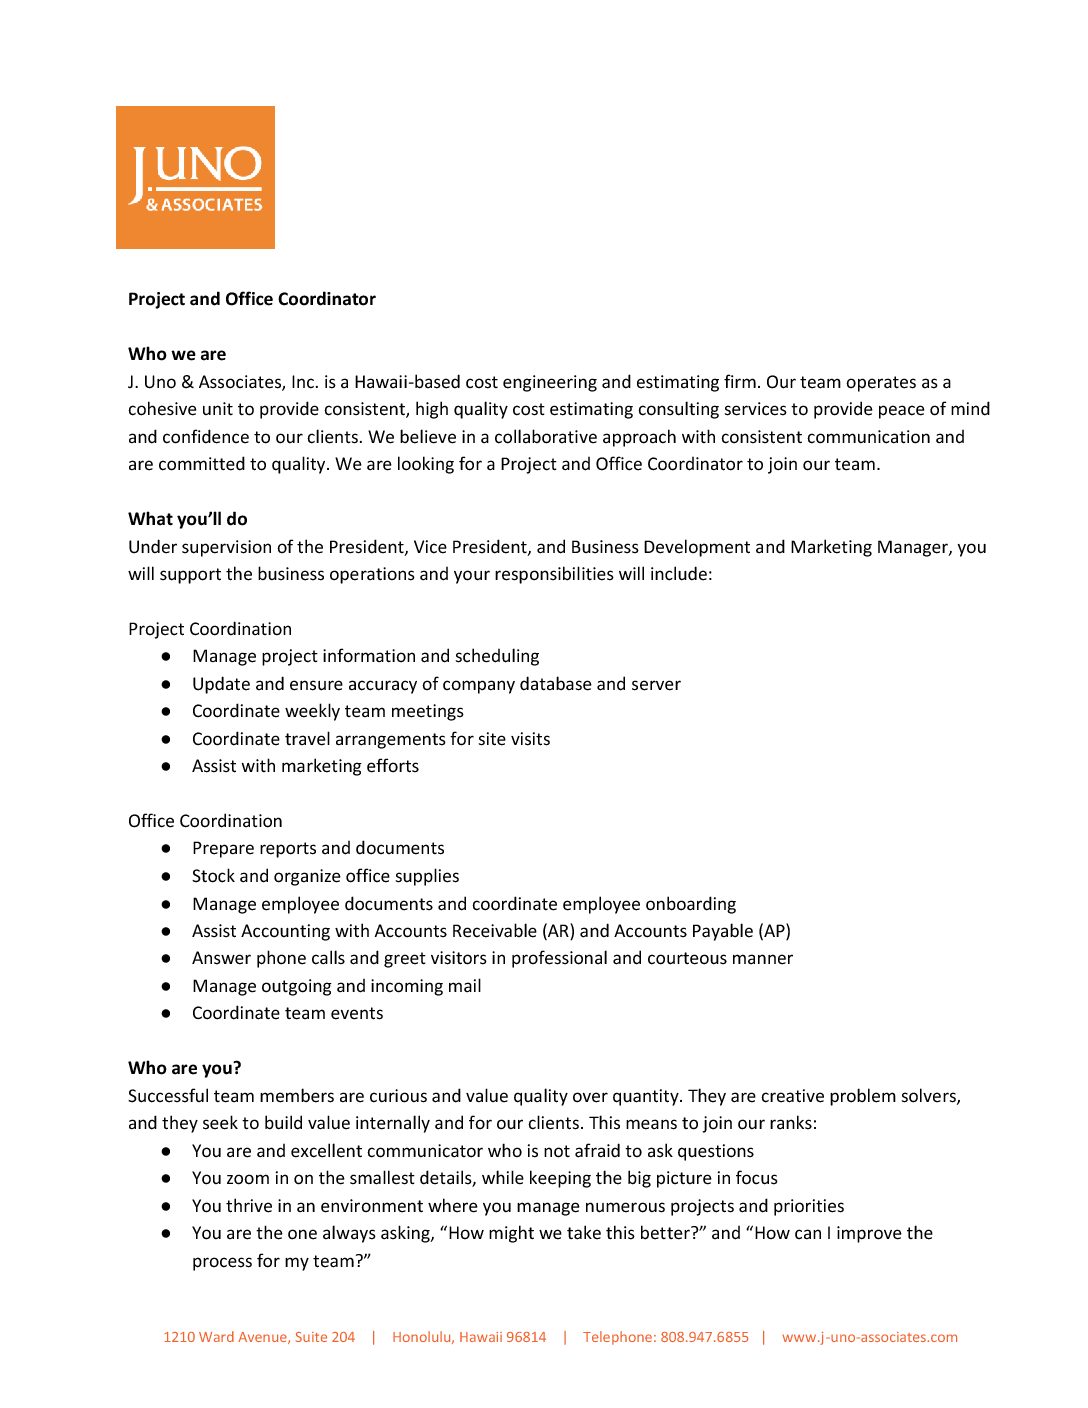 Project and Office Coordinator Job Description • J. Uno & Associates, Inc.